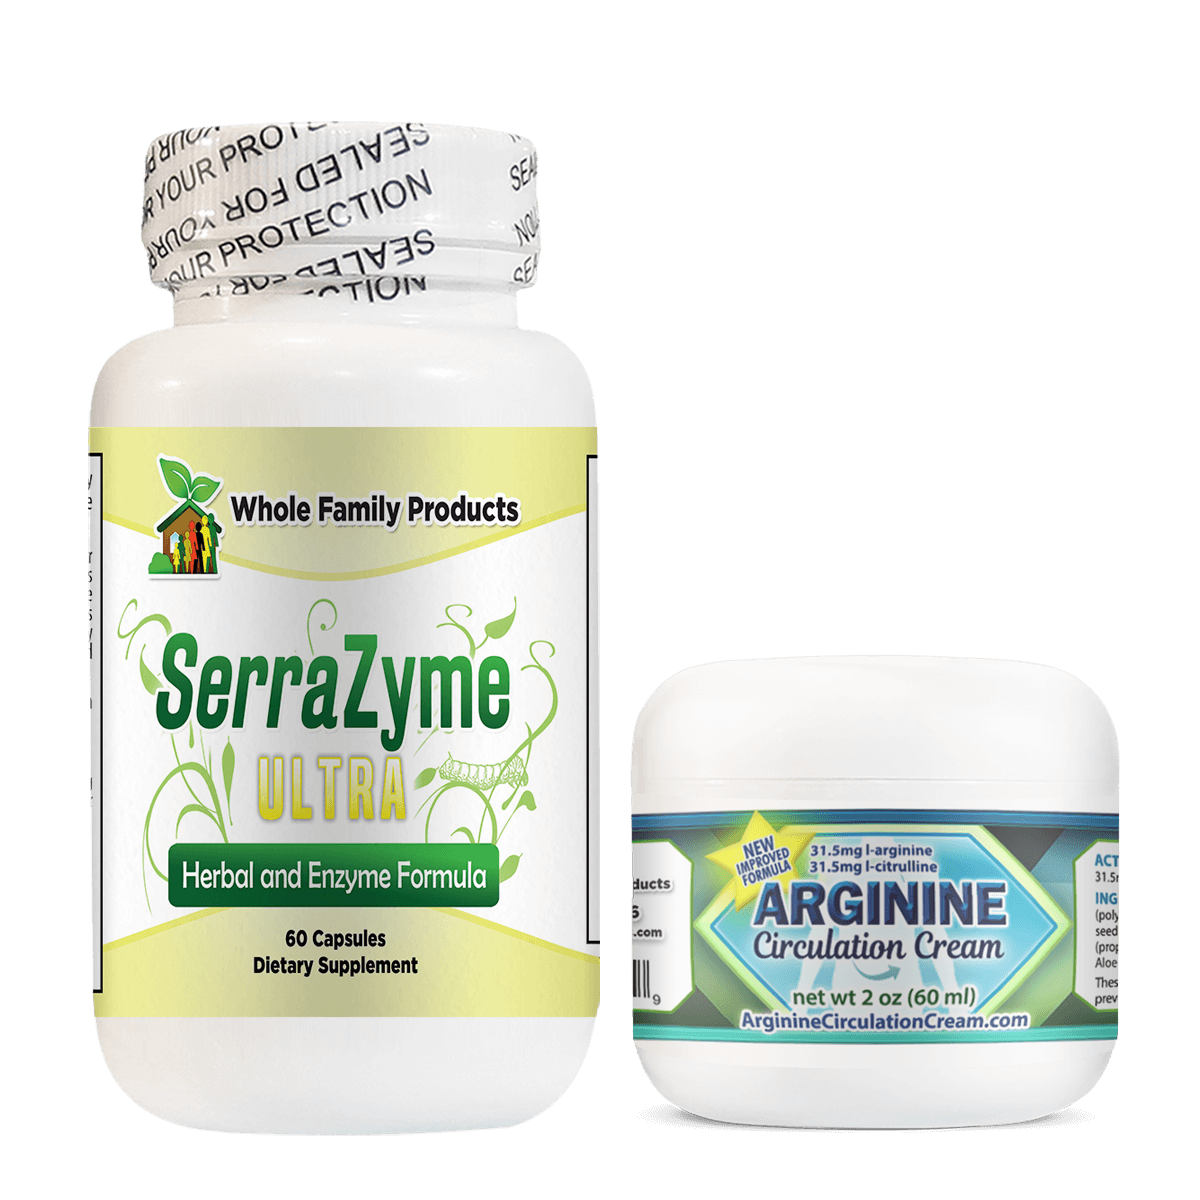 Serrazyme Ultra 60ct and Arginine Circulation Cream 2oz Jar WFP Asia Bundle